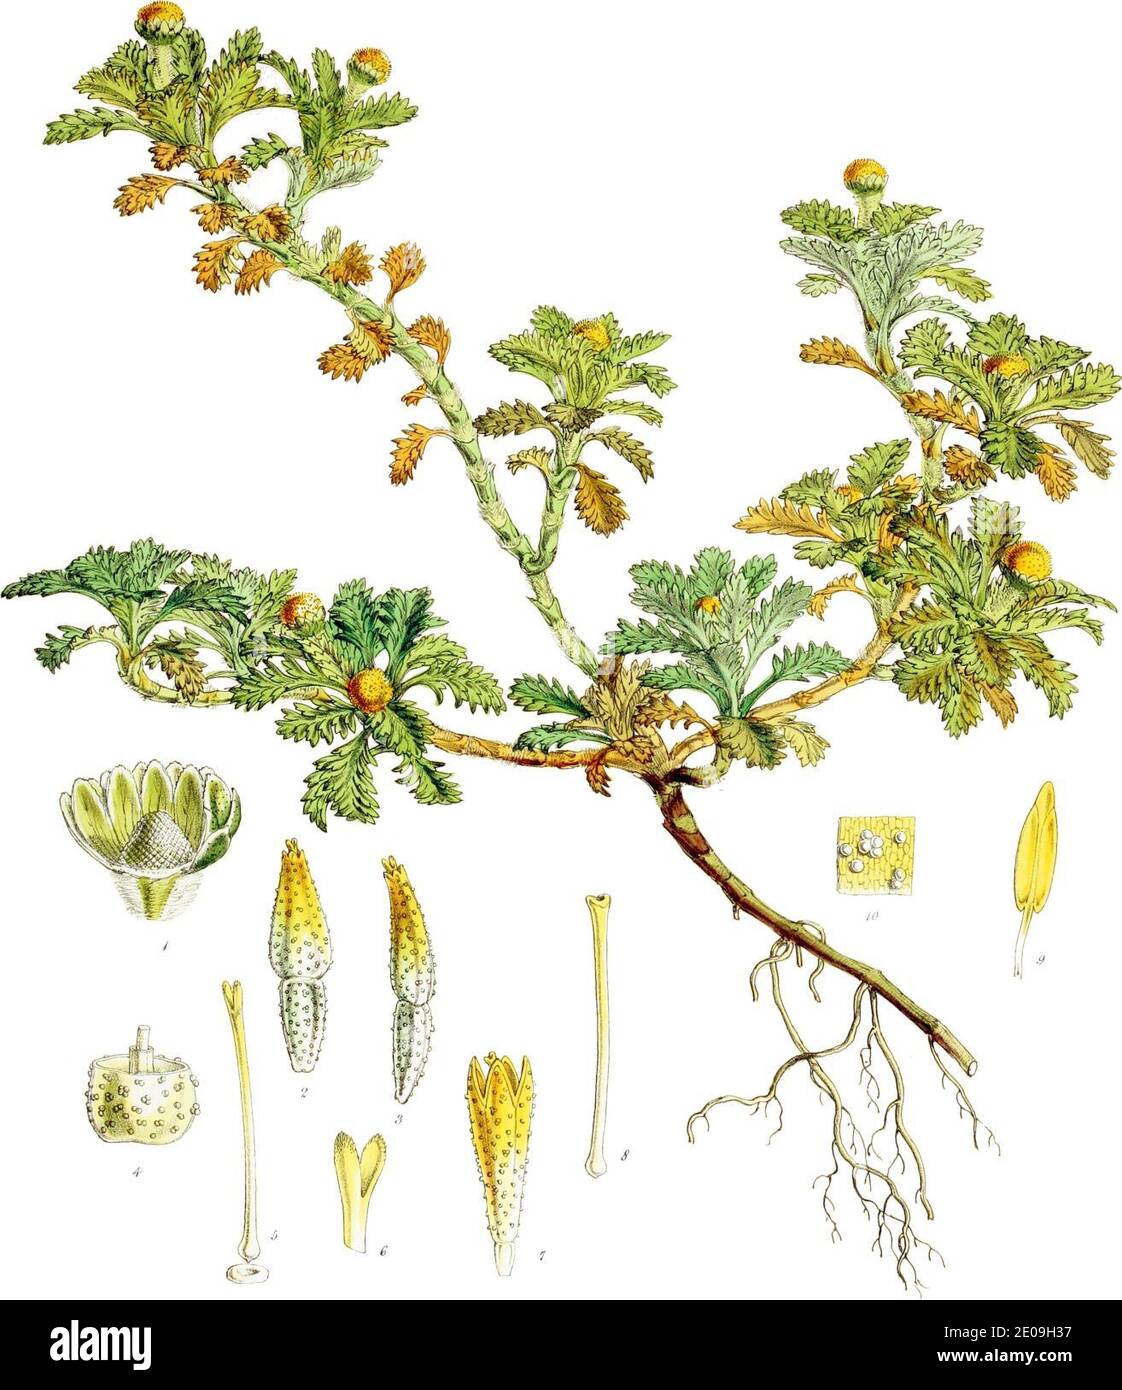 Leptinella lanata-Botany of Antarctica-PL019-0043. Stock Photo